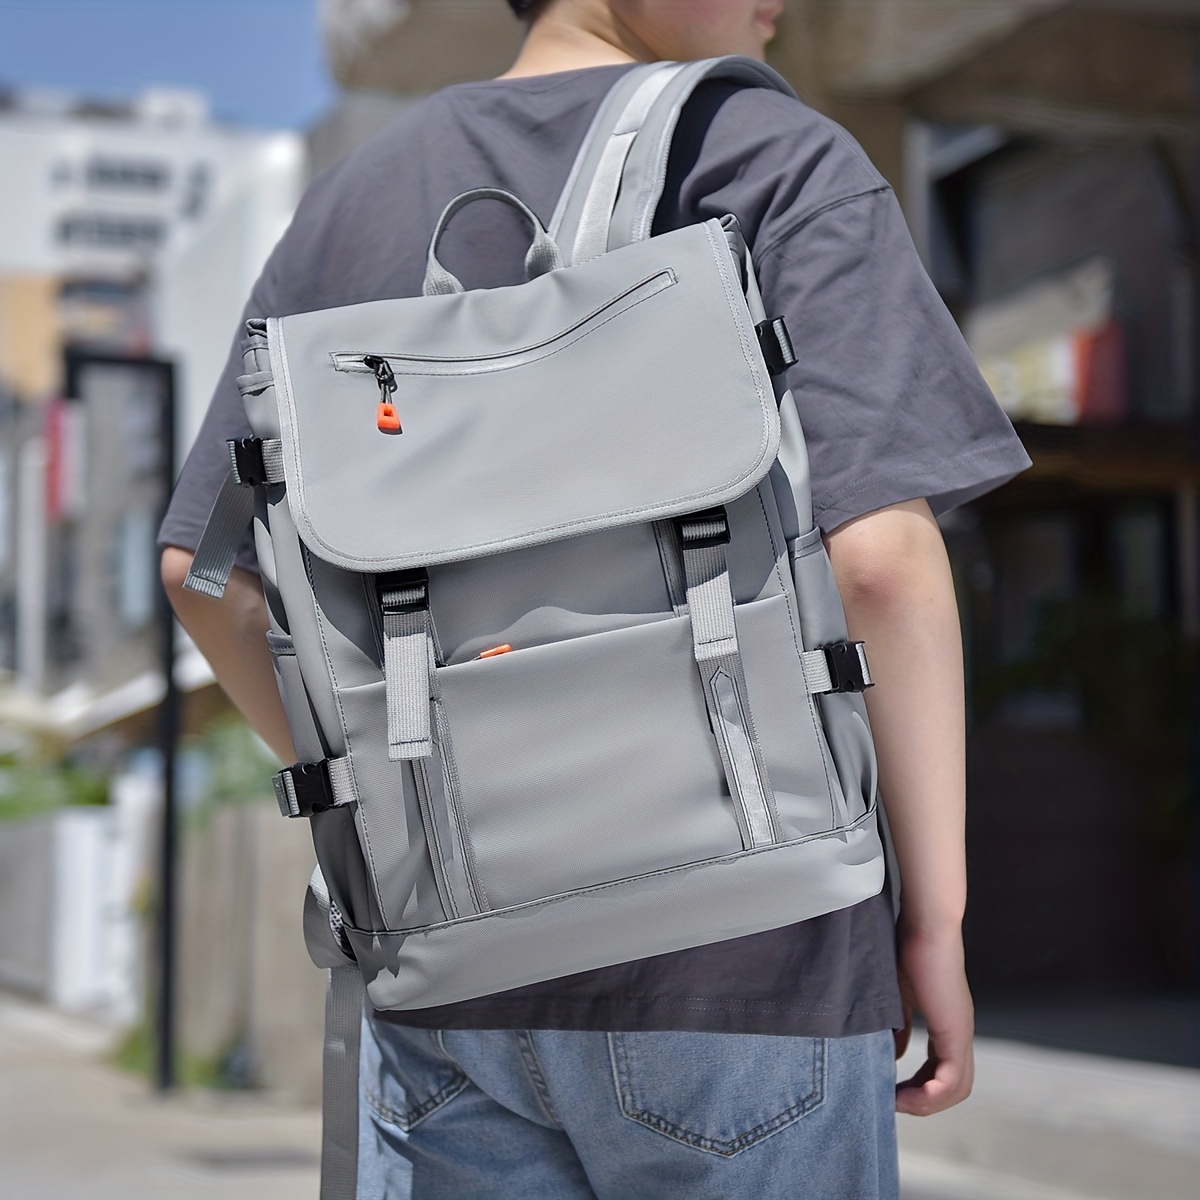 Buy KAKA Korean Style Student Men Backpack Schoolbag Large Capacity  Waterproof USB Charging Travel Backpack Laptop 17.3 inches Bag (Black) at